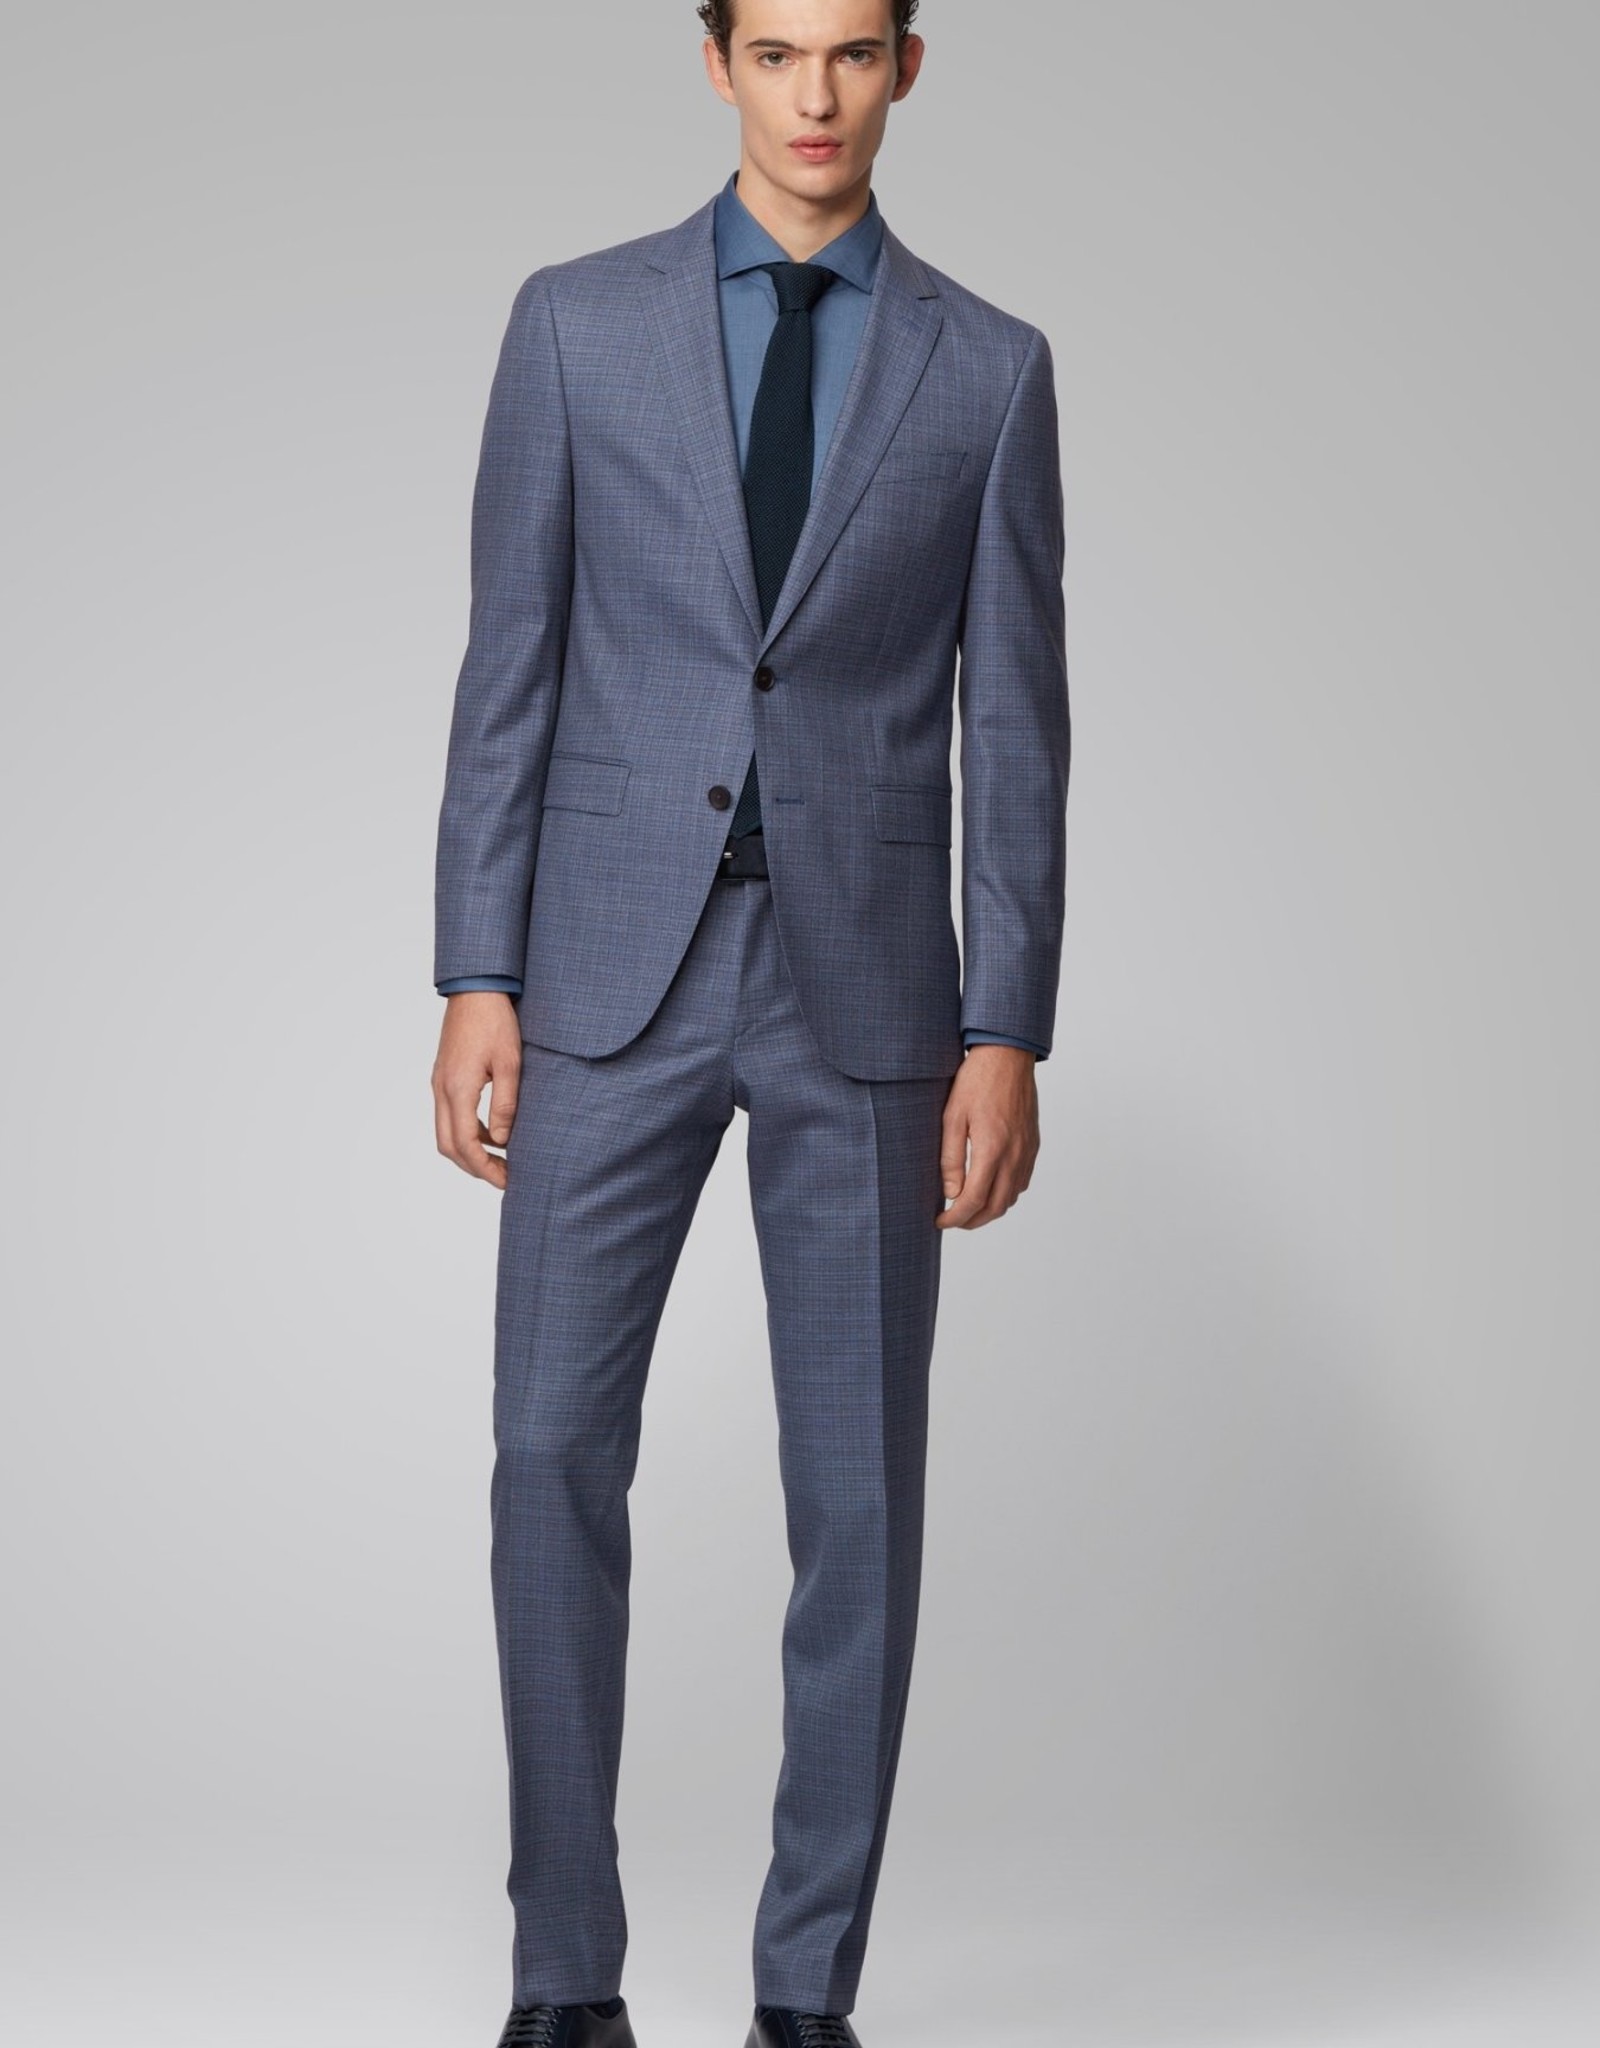 Hugo Boss Suit - Colpitts Men's Wear Ltd.